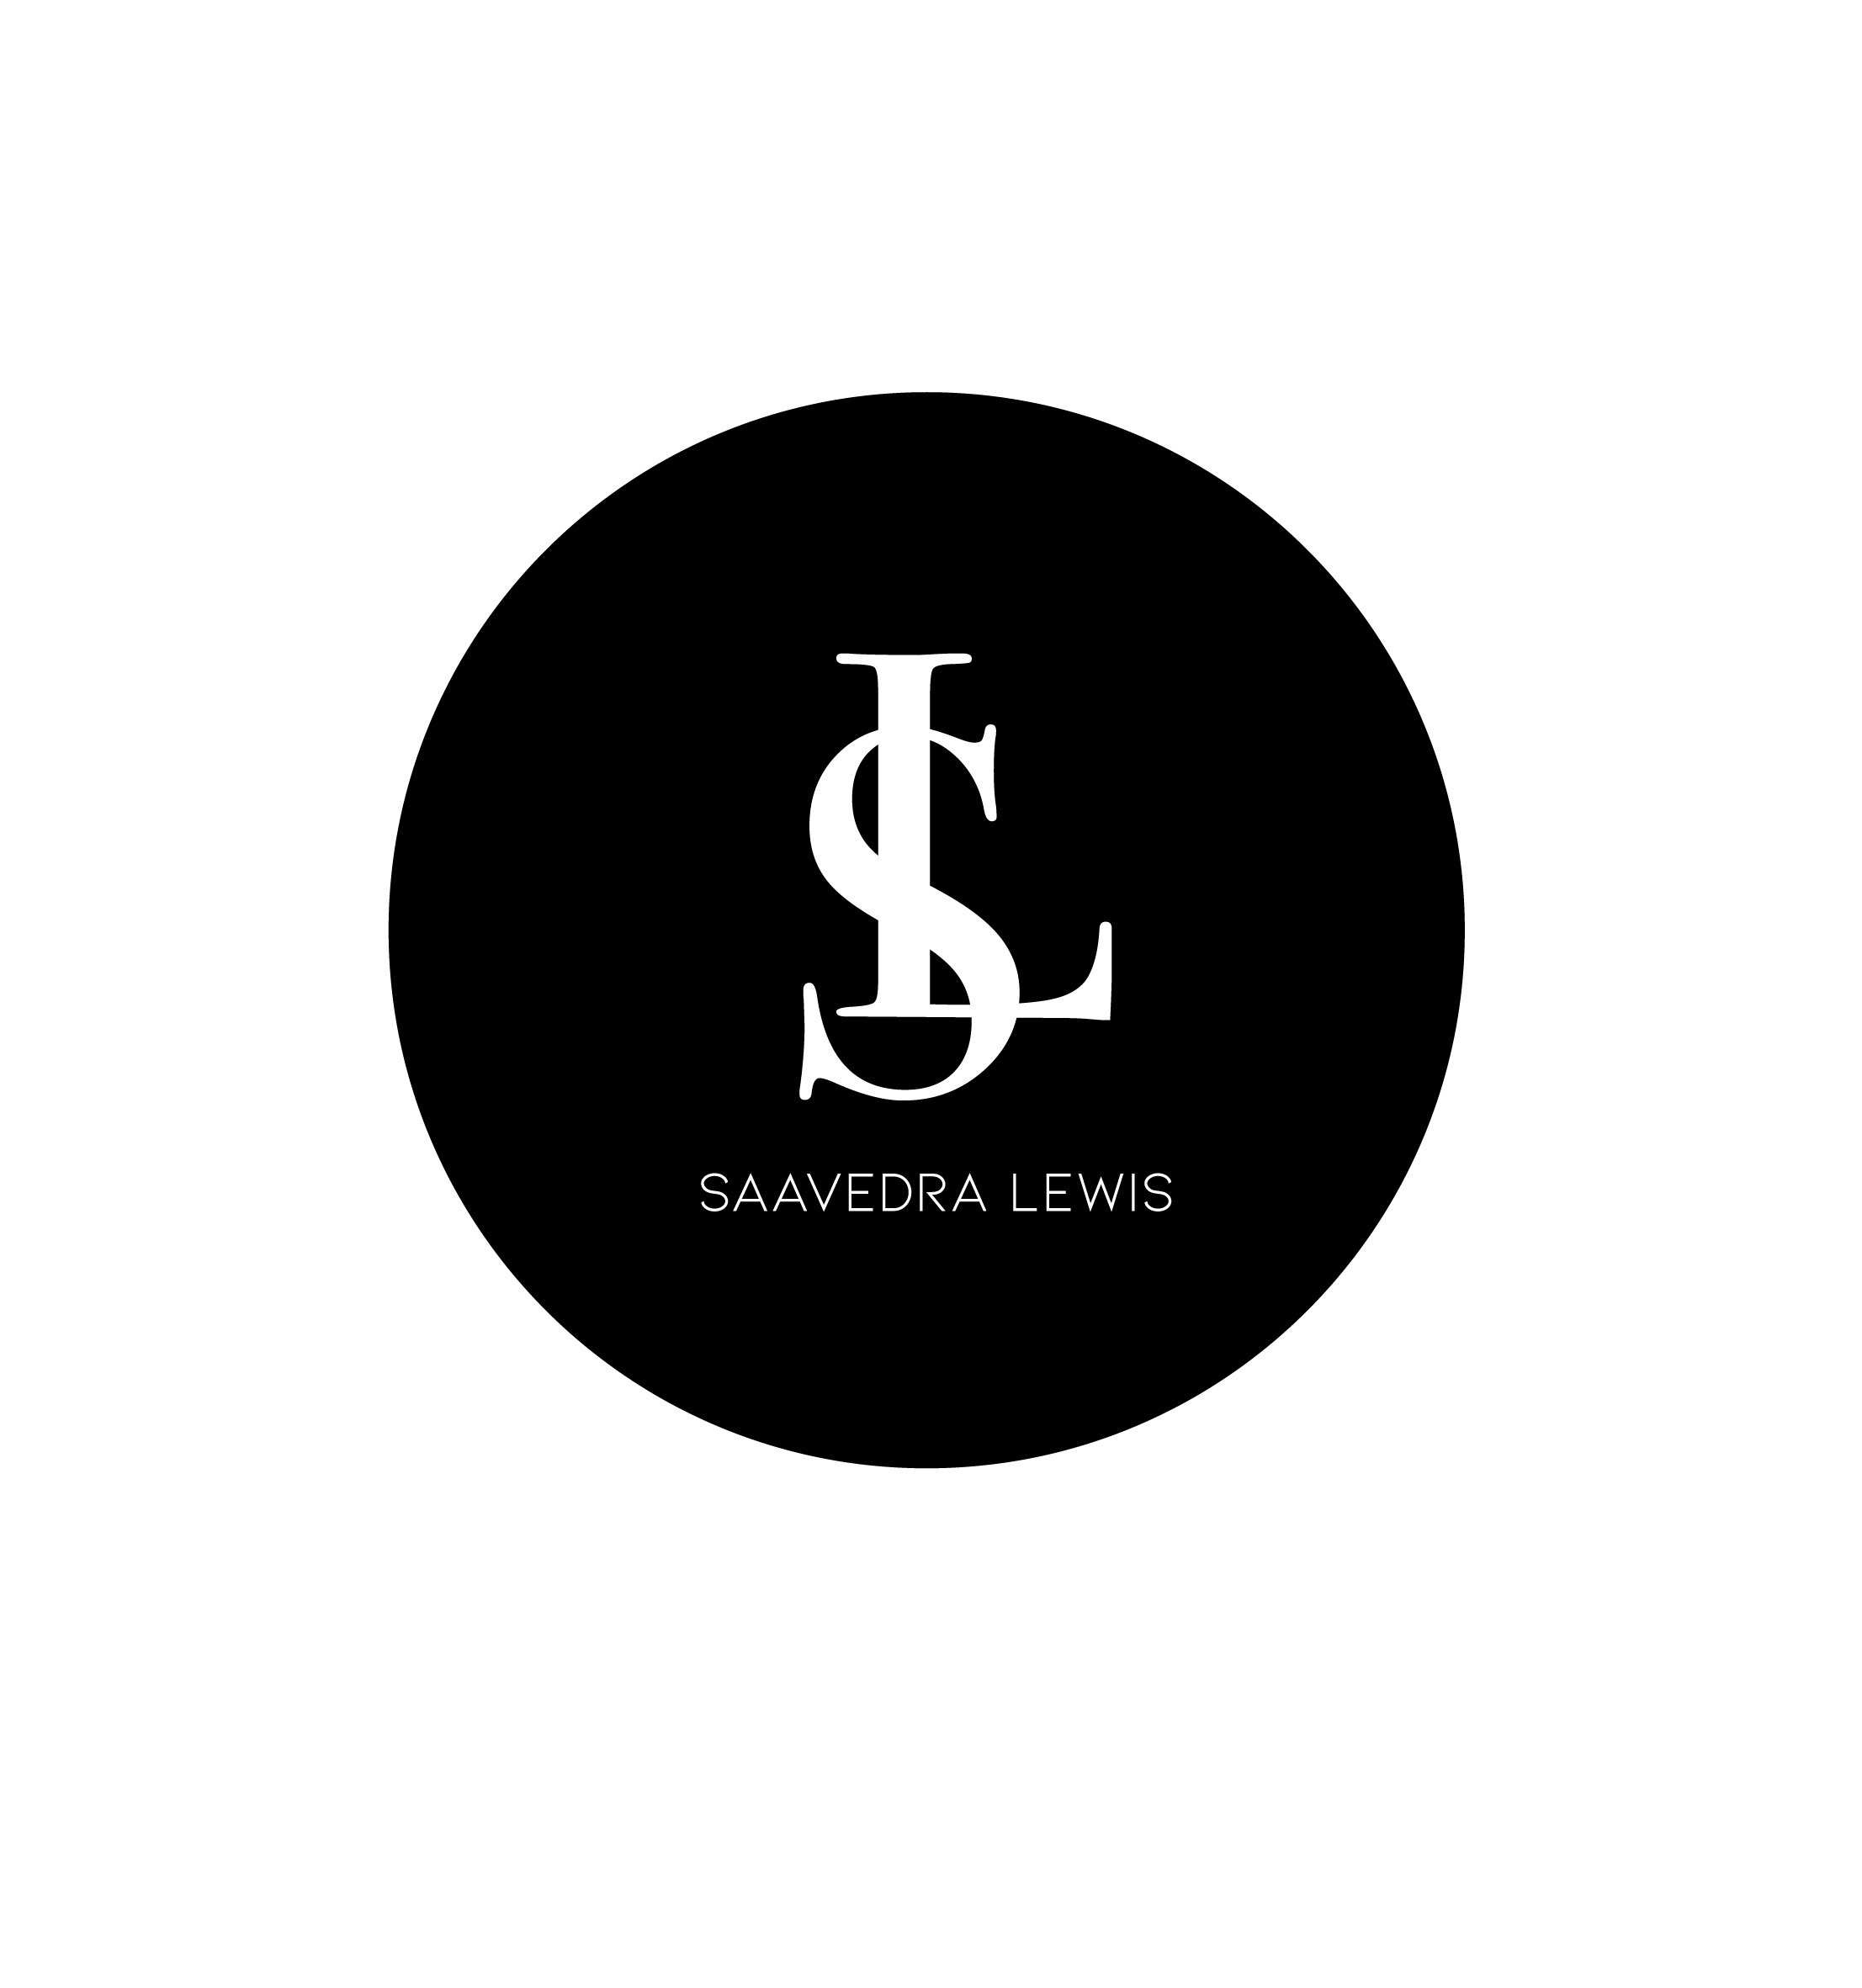 SAAVEDRA LEWIS